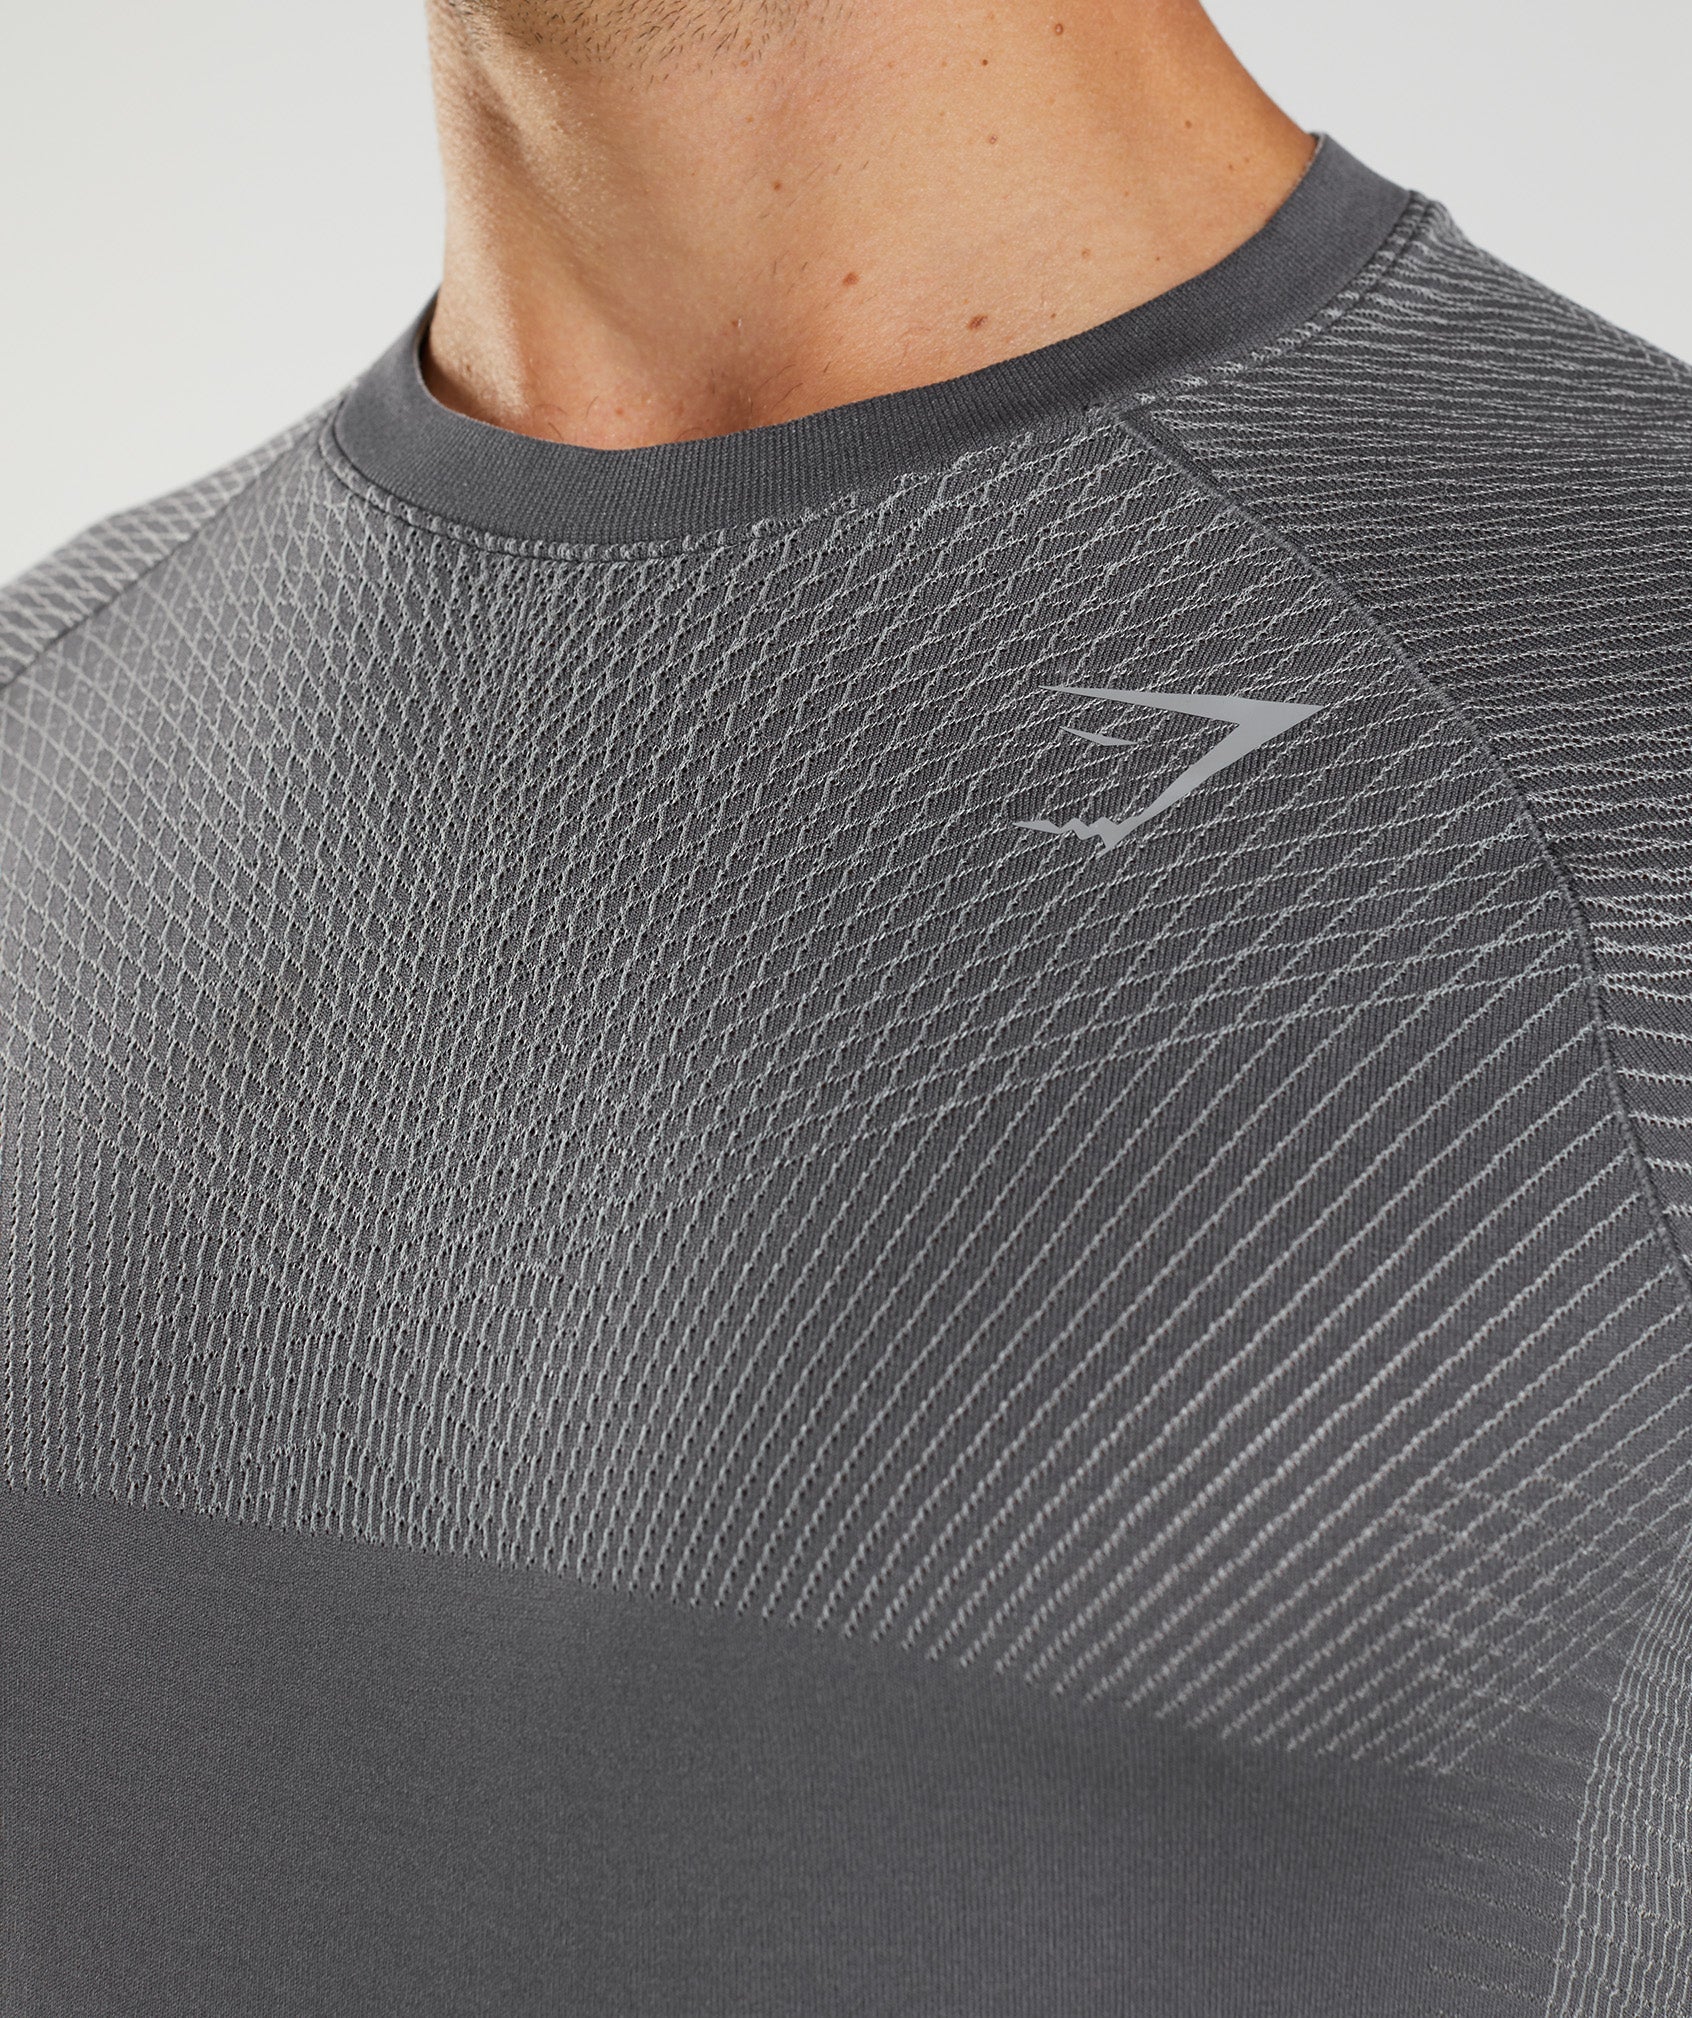 Apex Seamless Long Sleeve T-Shirt in Silhouette Grey/Smokey Grey - view 6